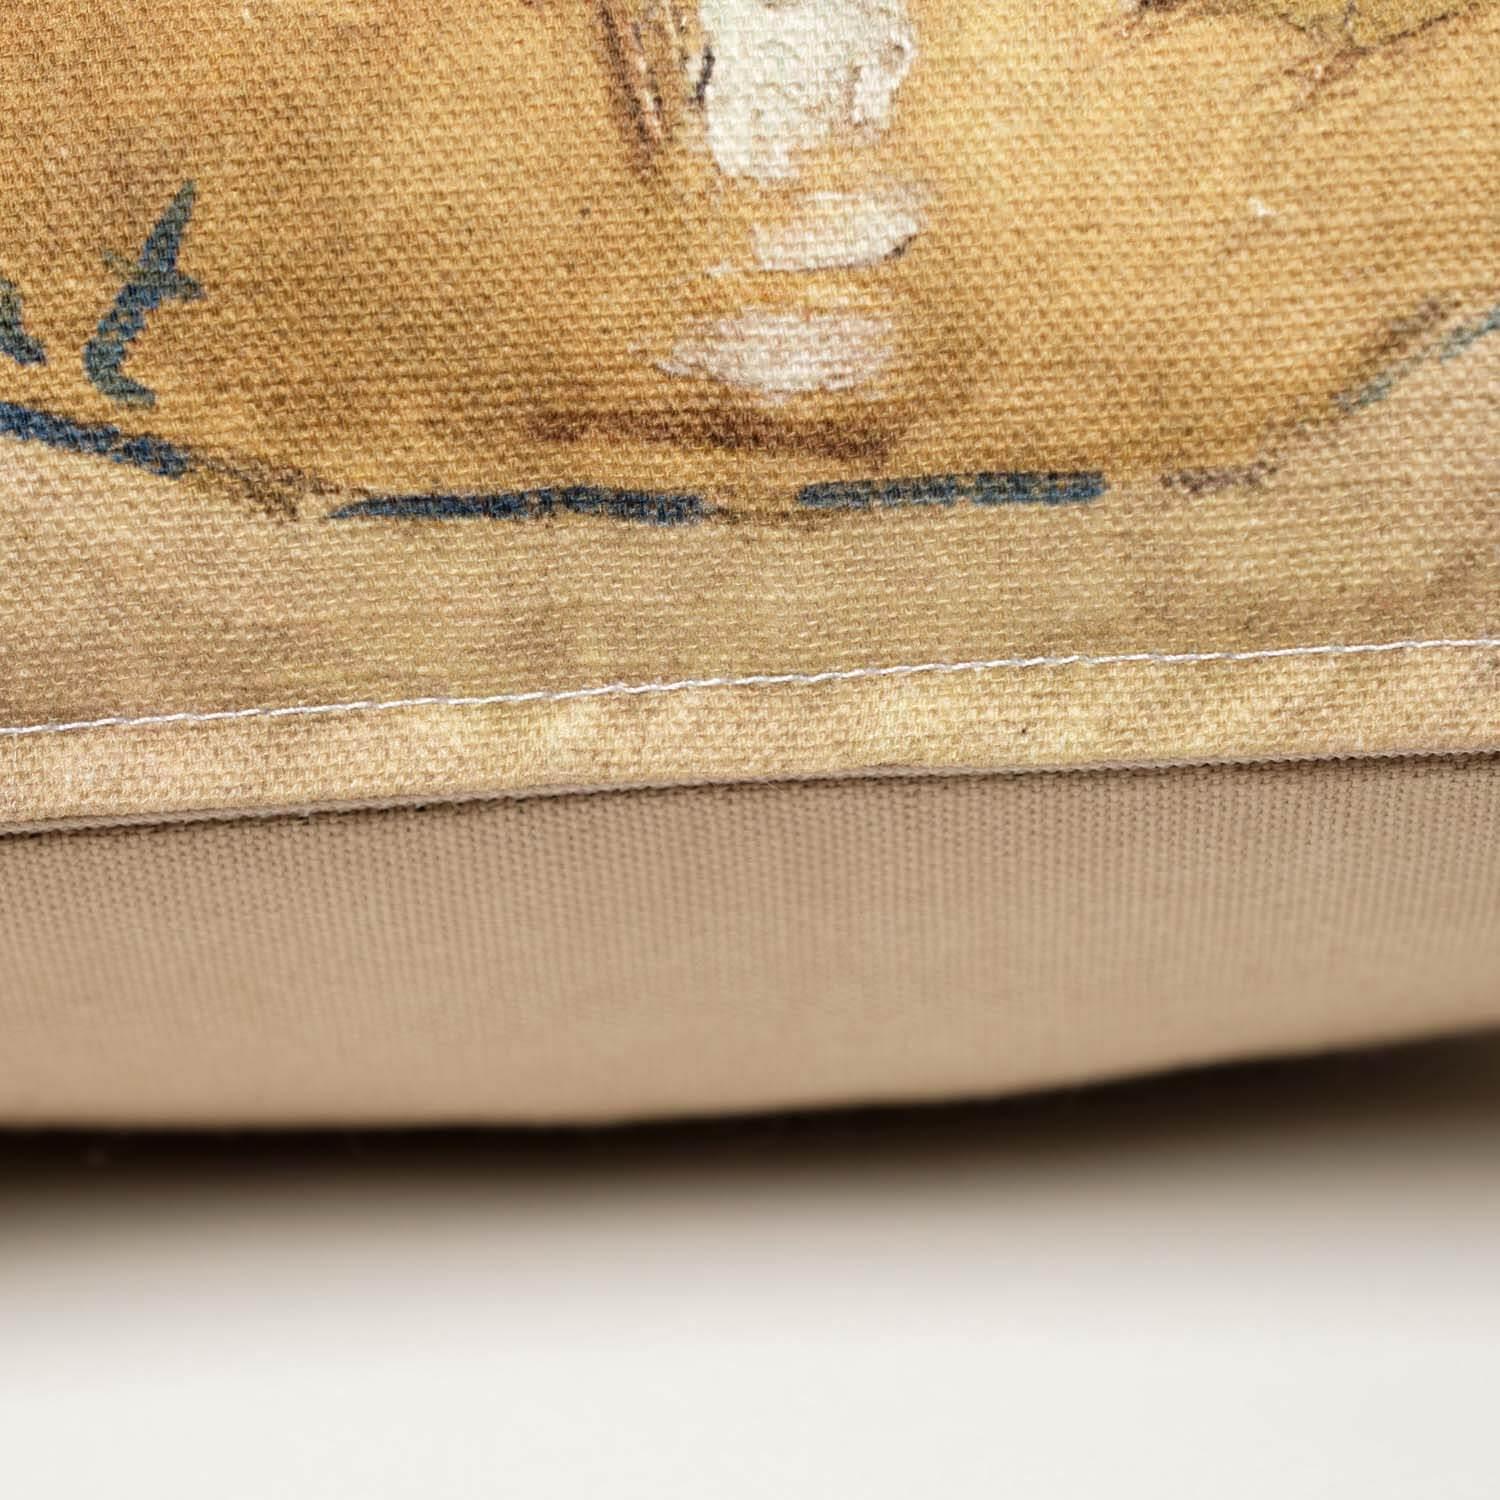 The Hay Wain - John Constable’s - National Gallery Cushion - Handmade Cushions UK - WeLoveCushions